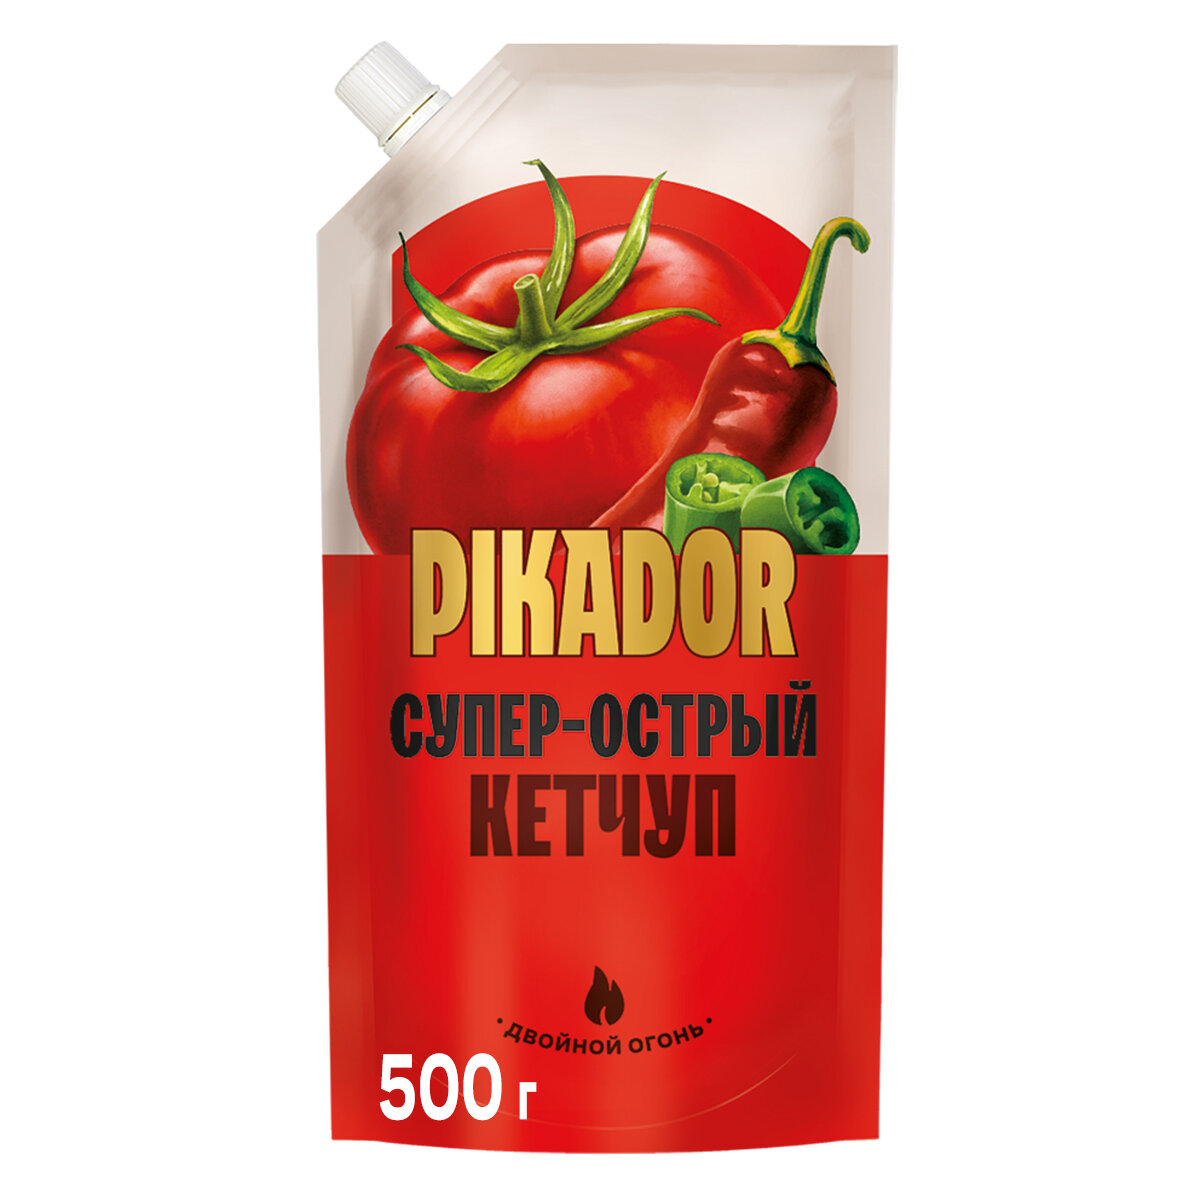 Pikador - кетчуп Супер Острый, 500 гр.